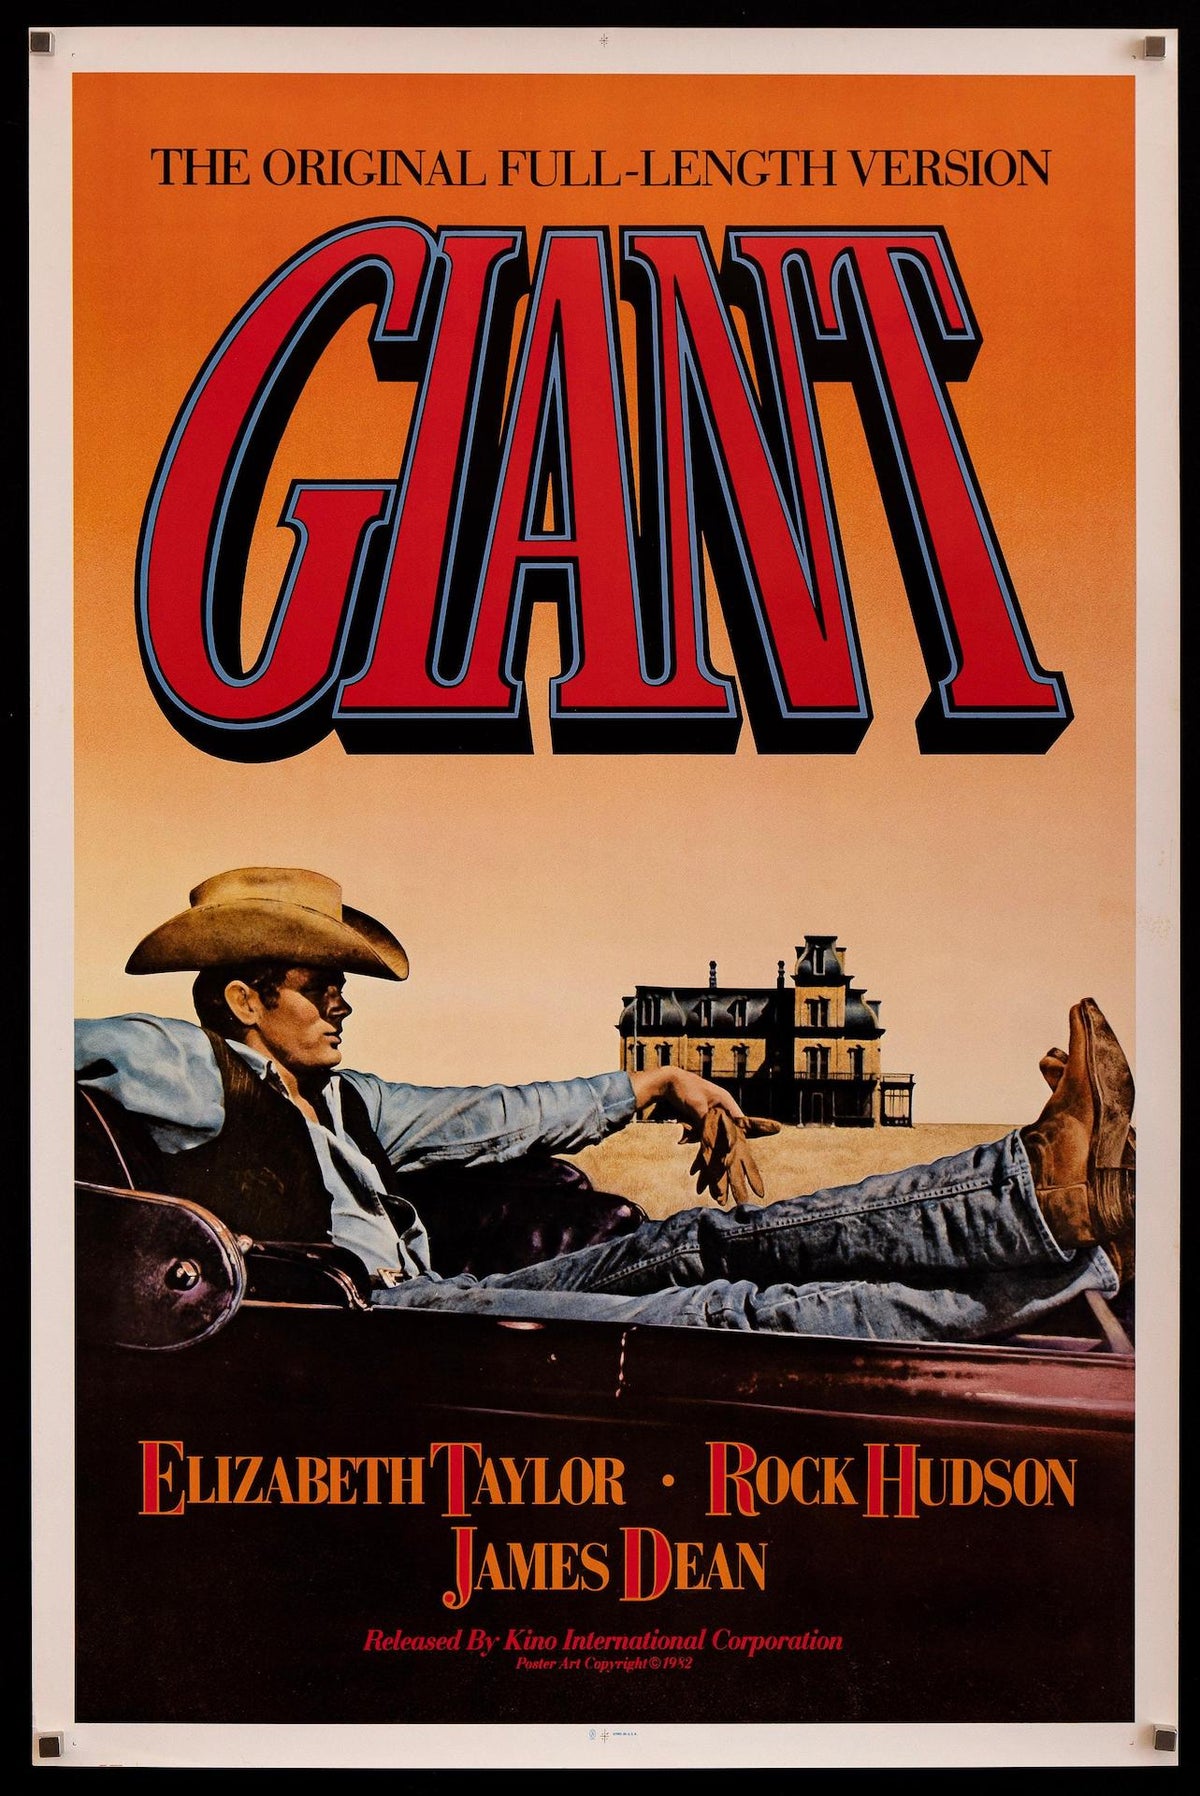 Giant 1 Sheet (27x41) Original Vintage Movie Poster